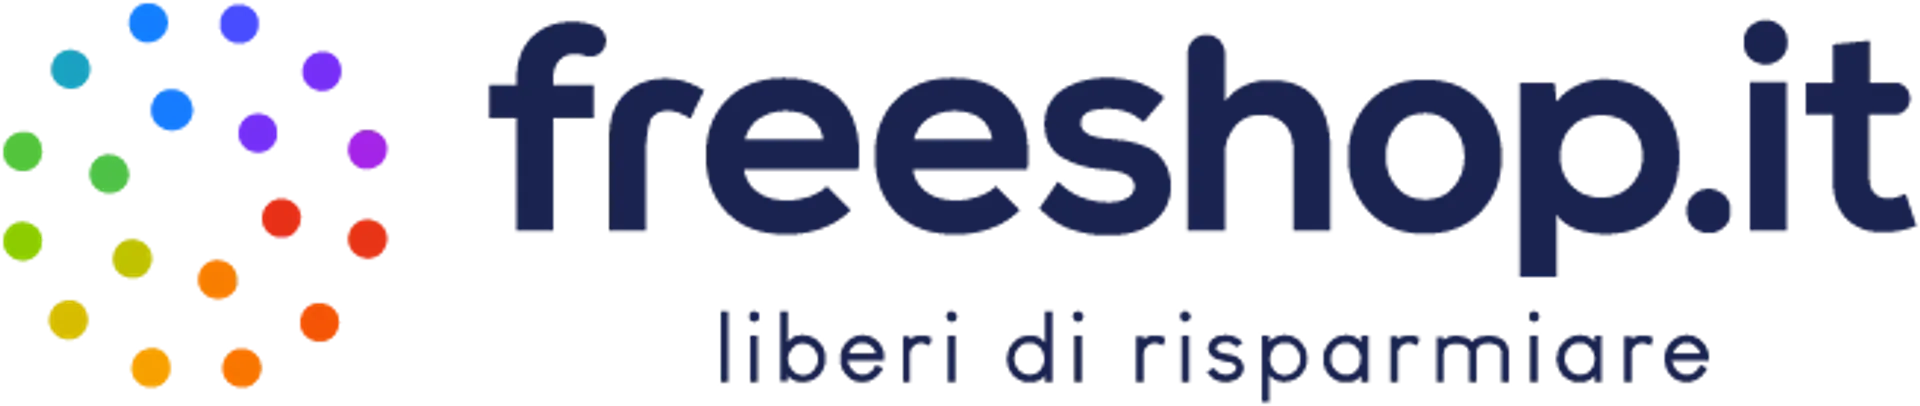 FREESHOP logo